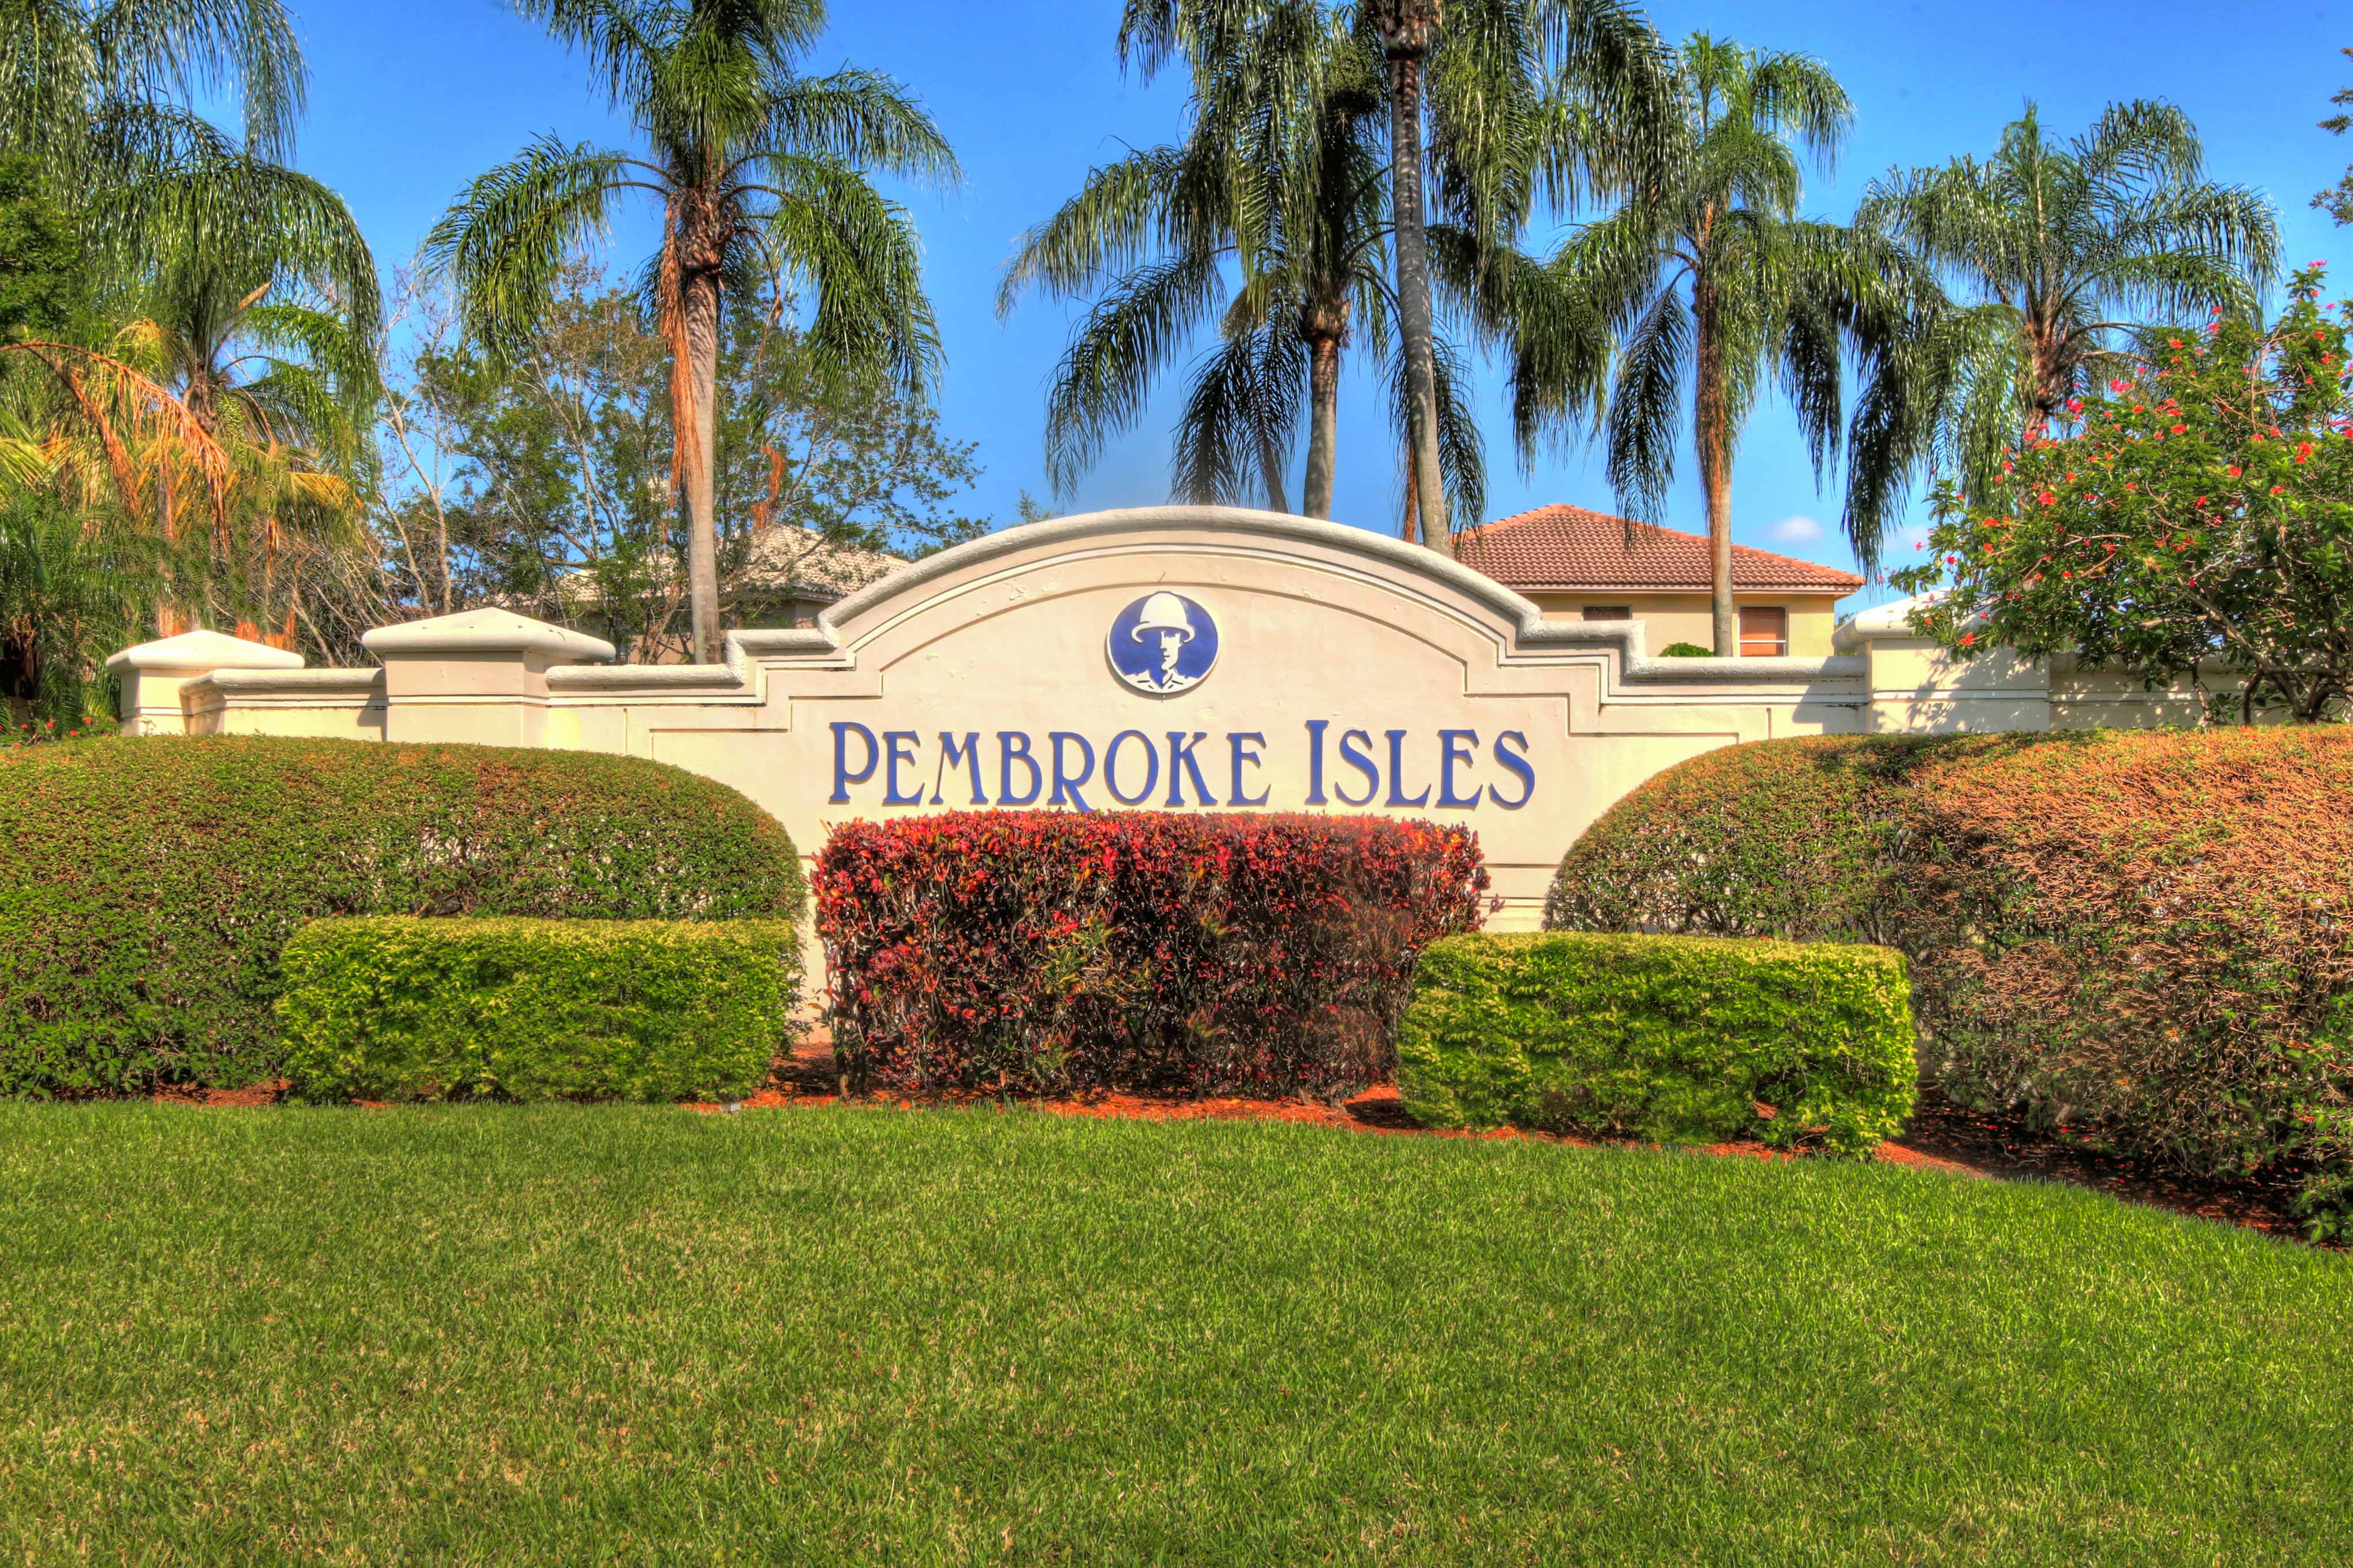 Pembroke Isles Condominiums